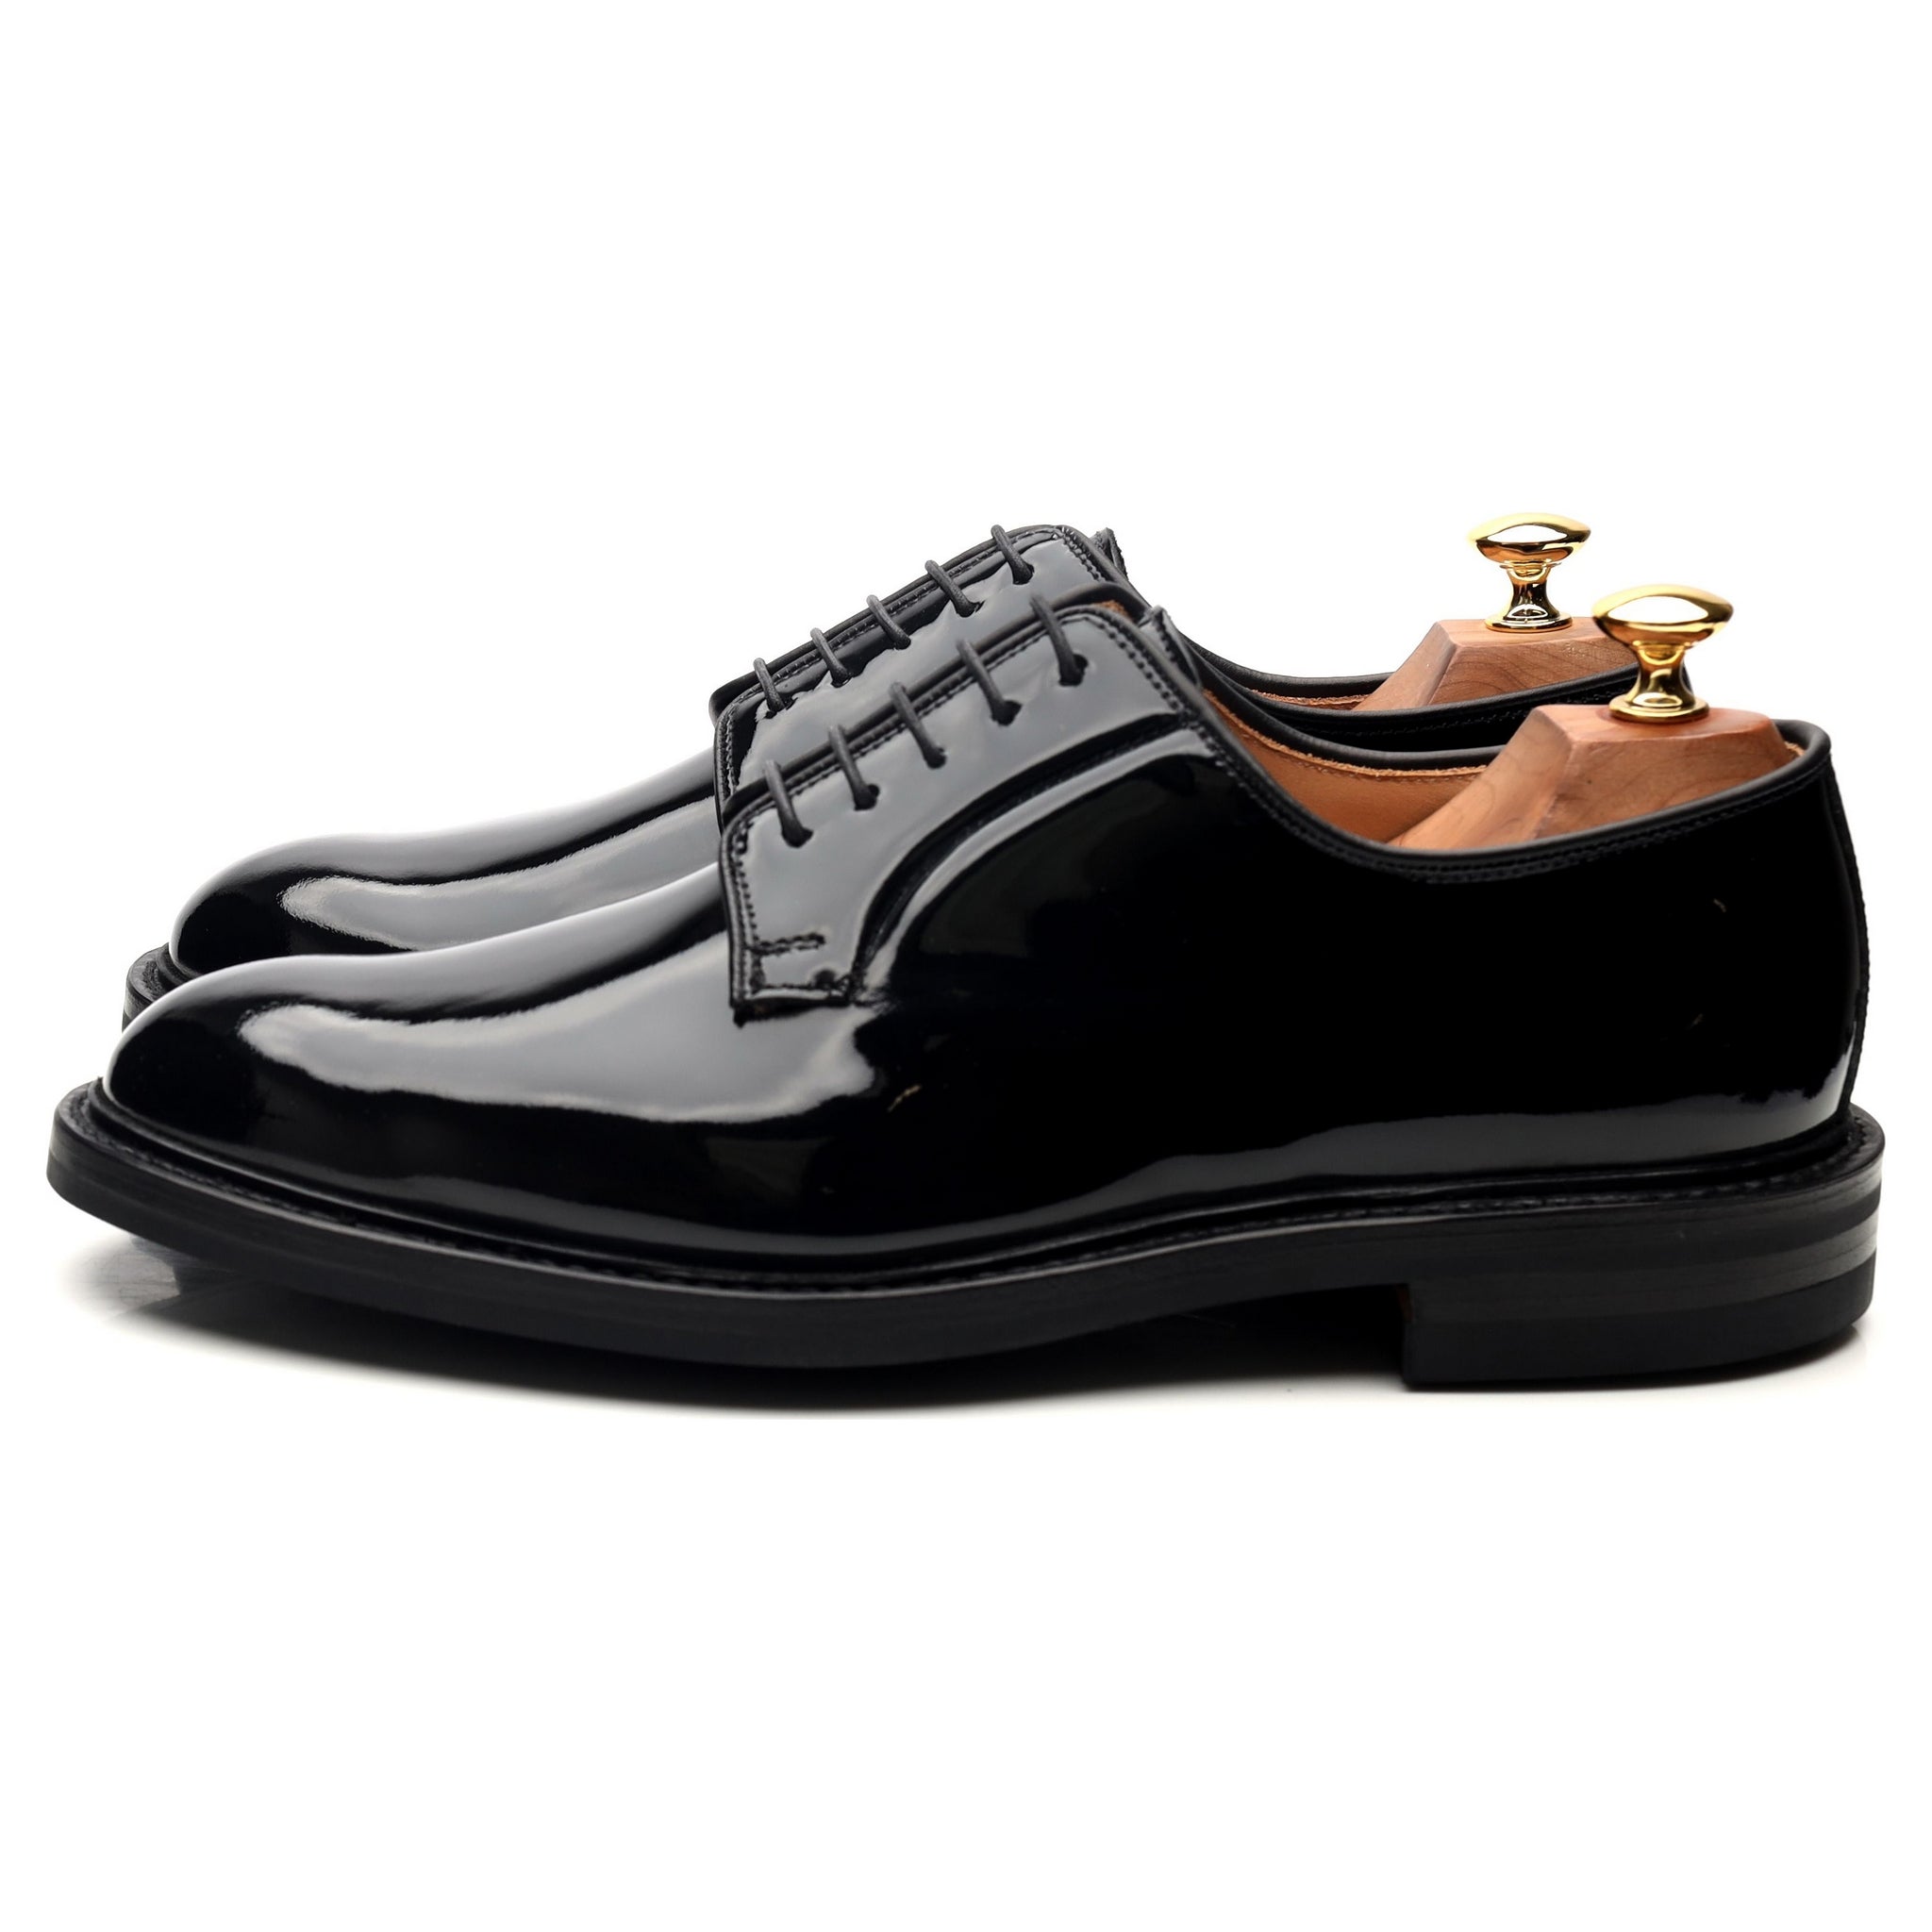 Lanark 3' Black Patent Leather Derby UK 9 E - Abbot's Shoes